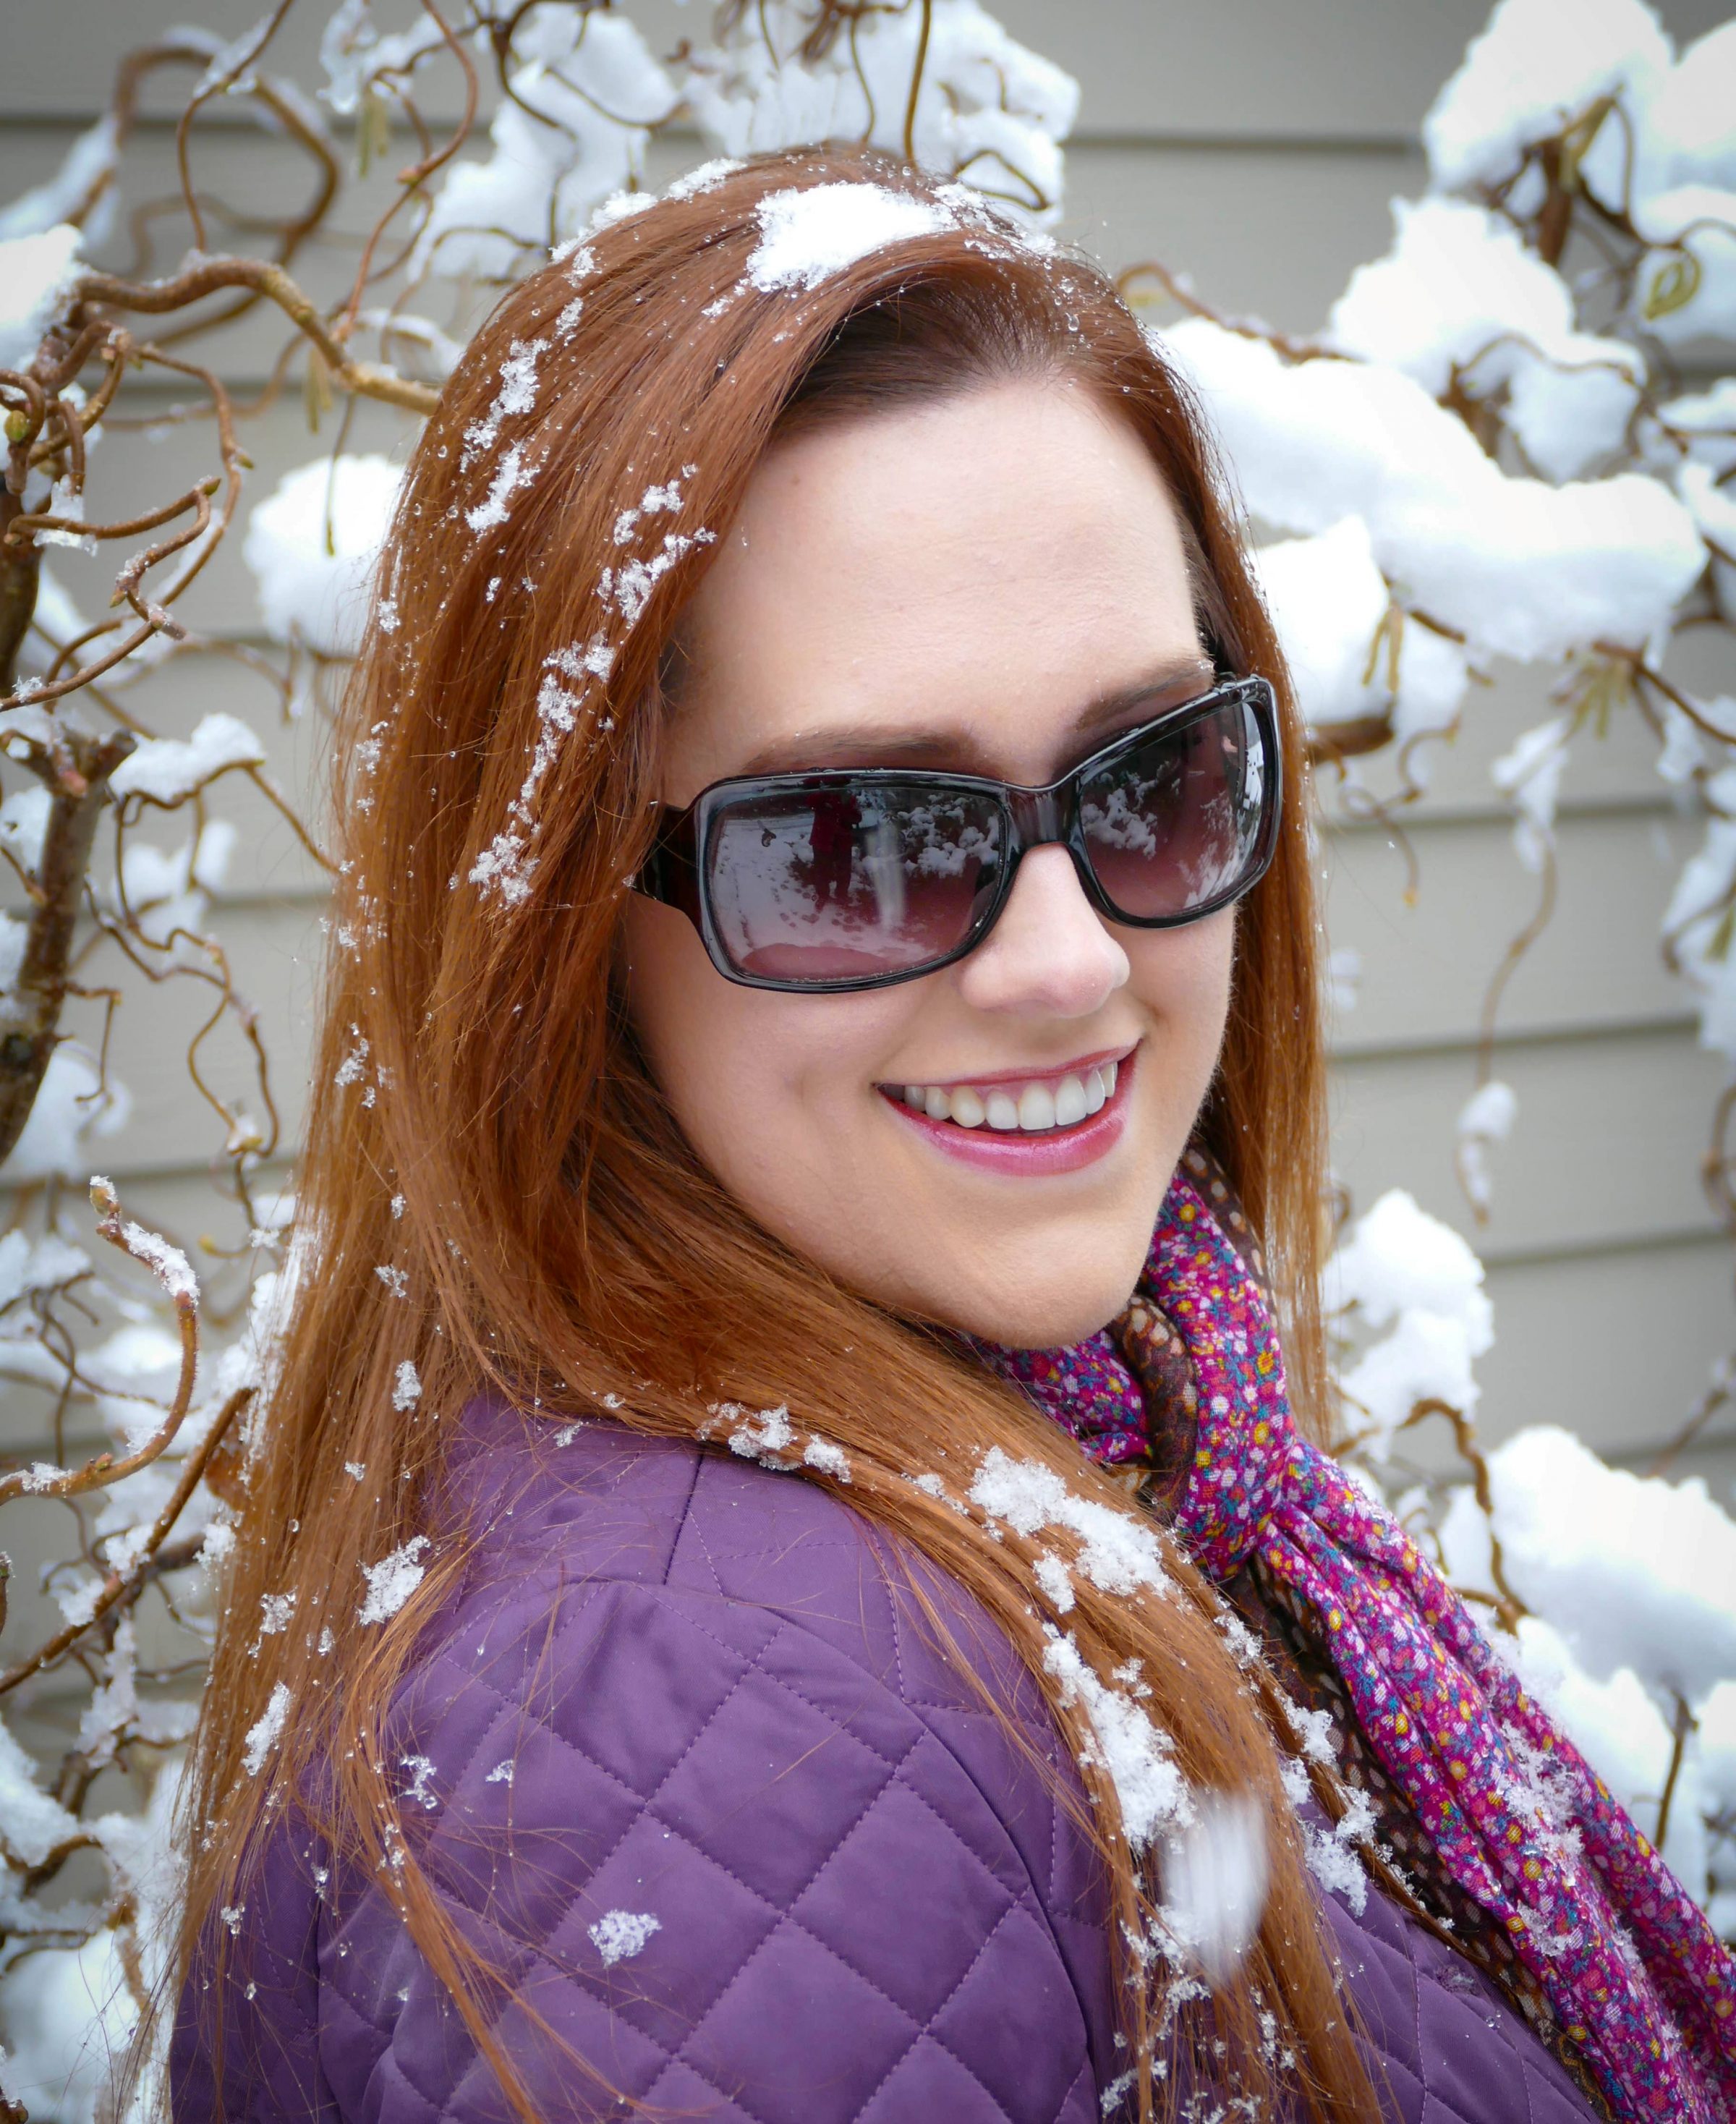 Snowing in Seattle - Katherine Chloe Cahoon A